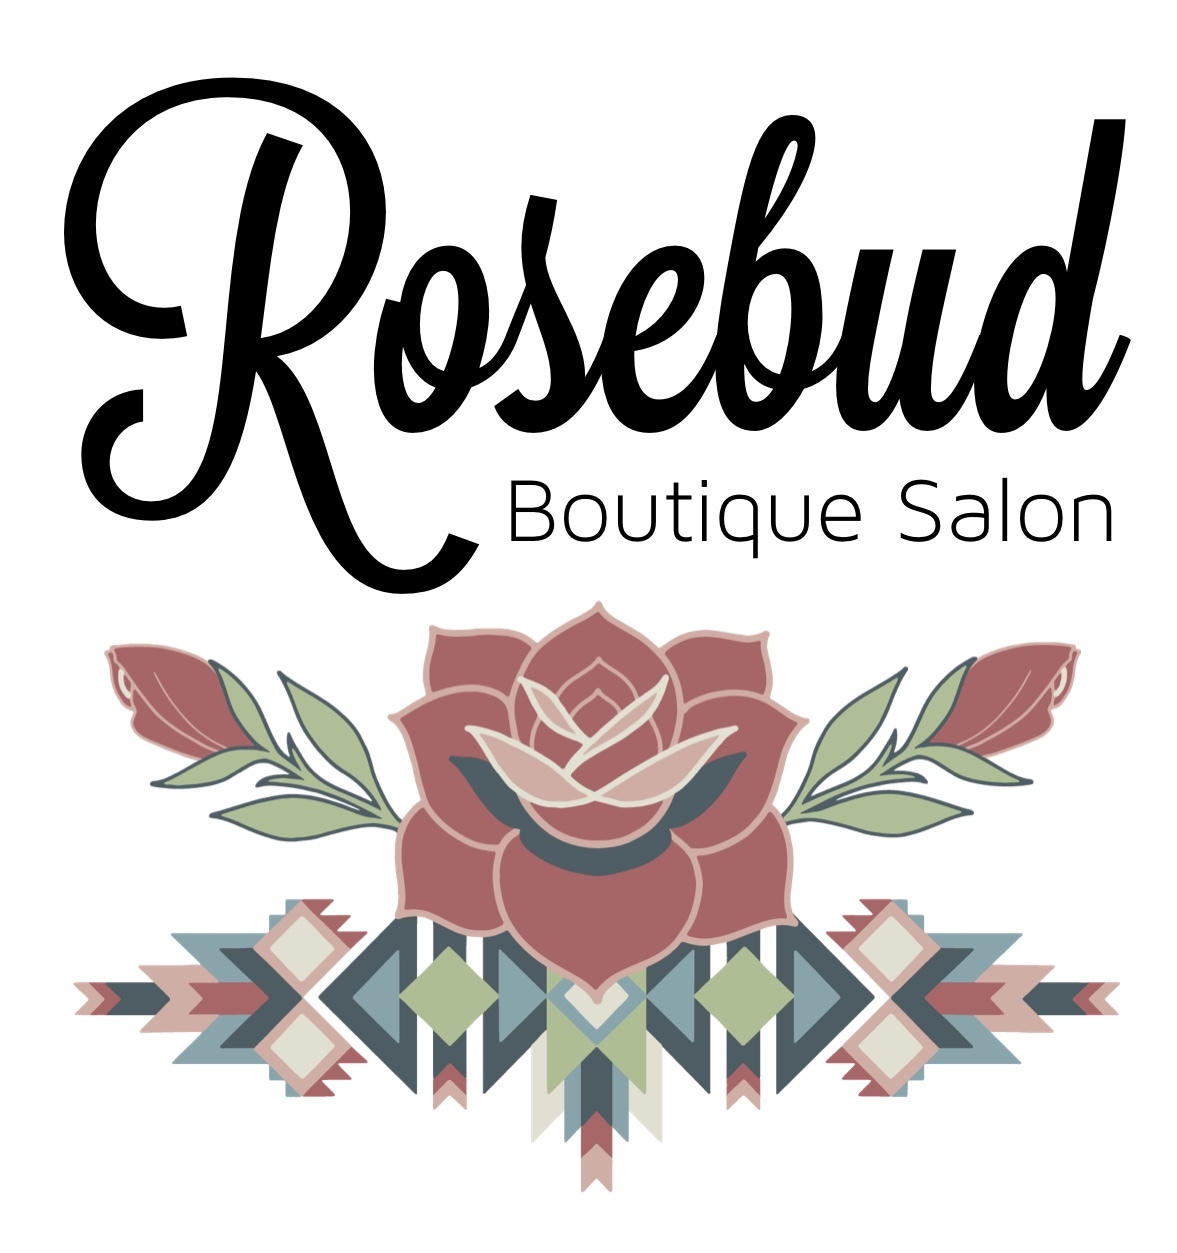 Rosebud Boutique Salon